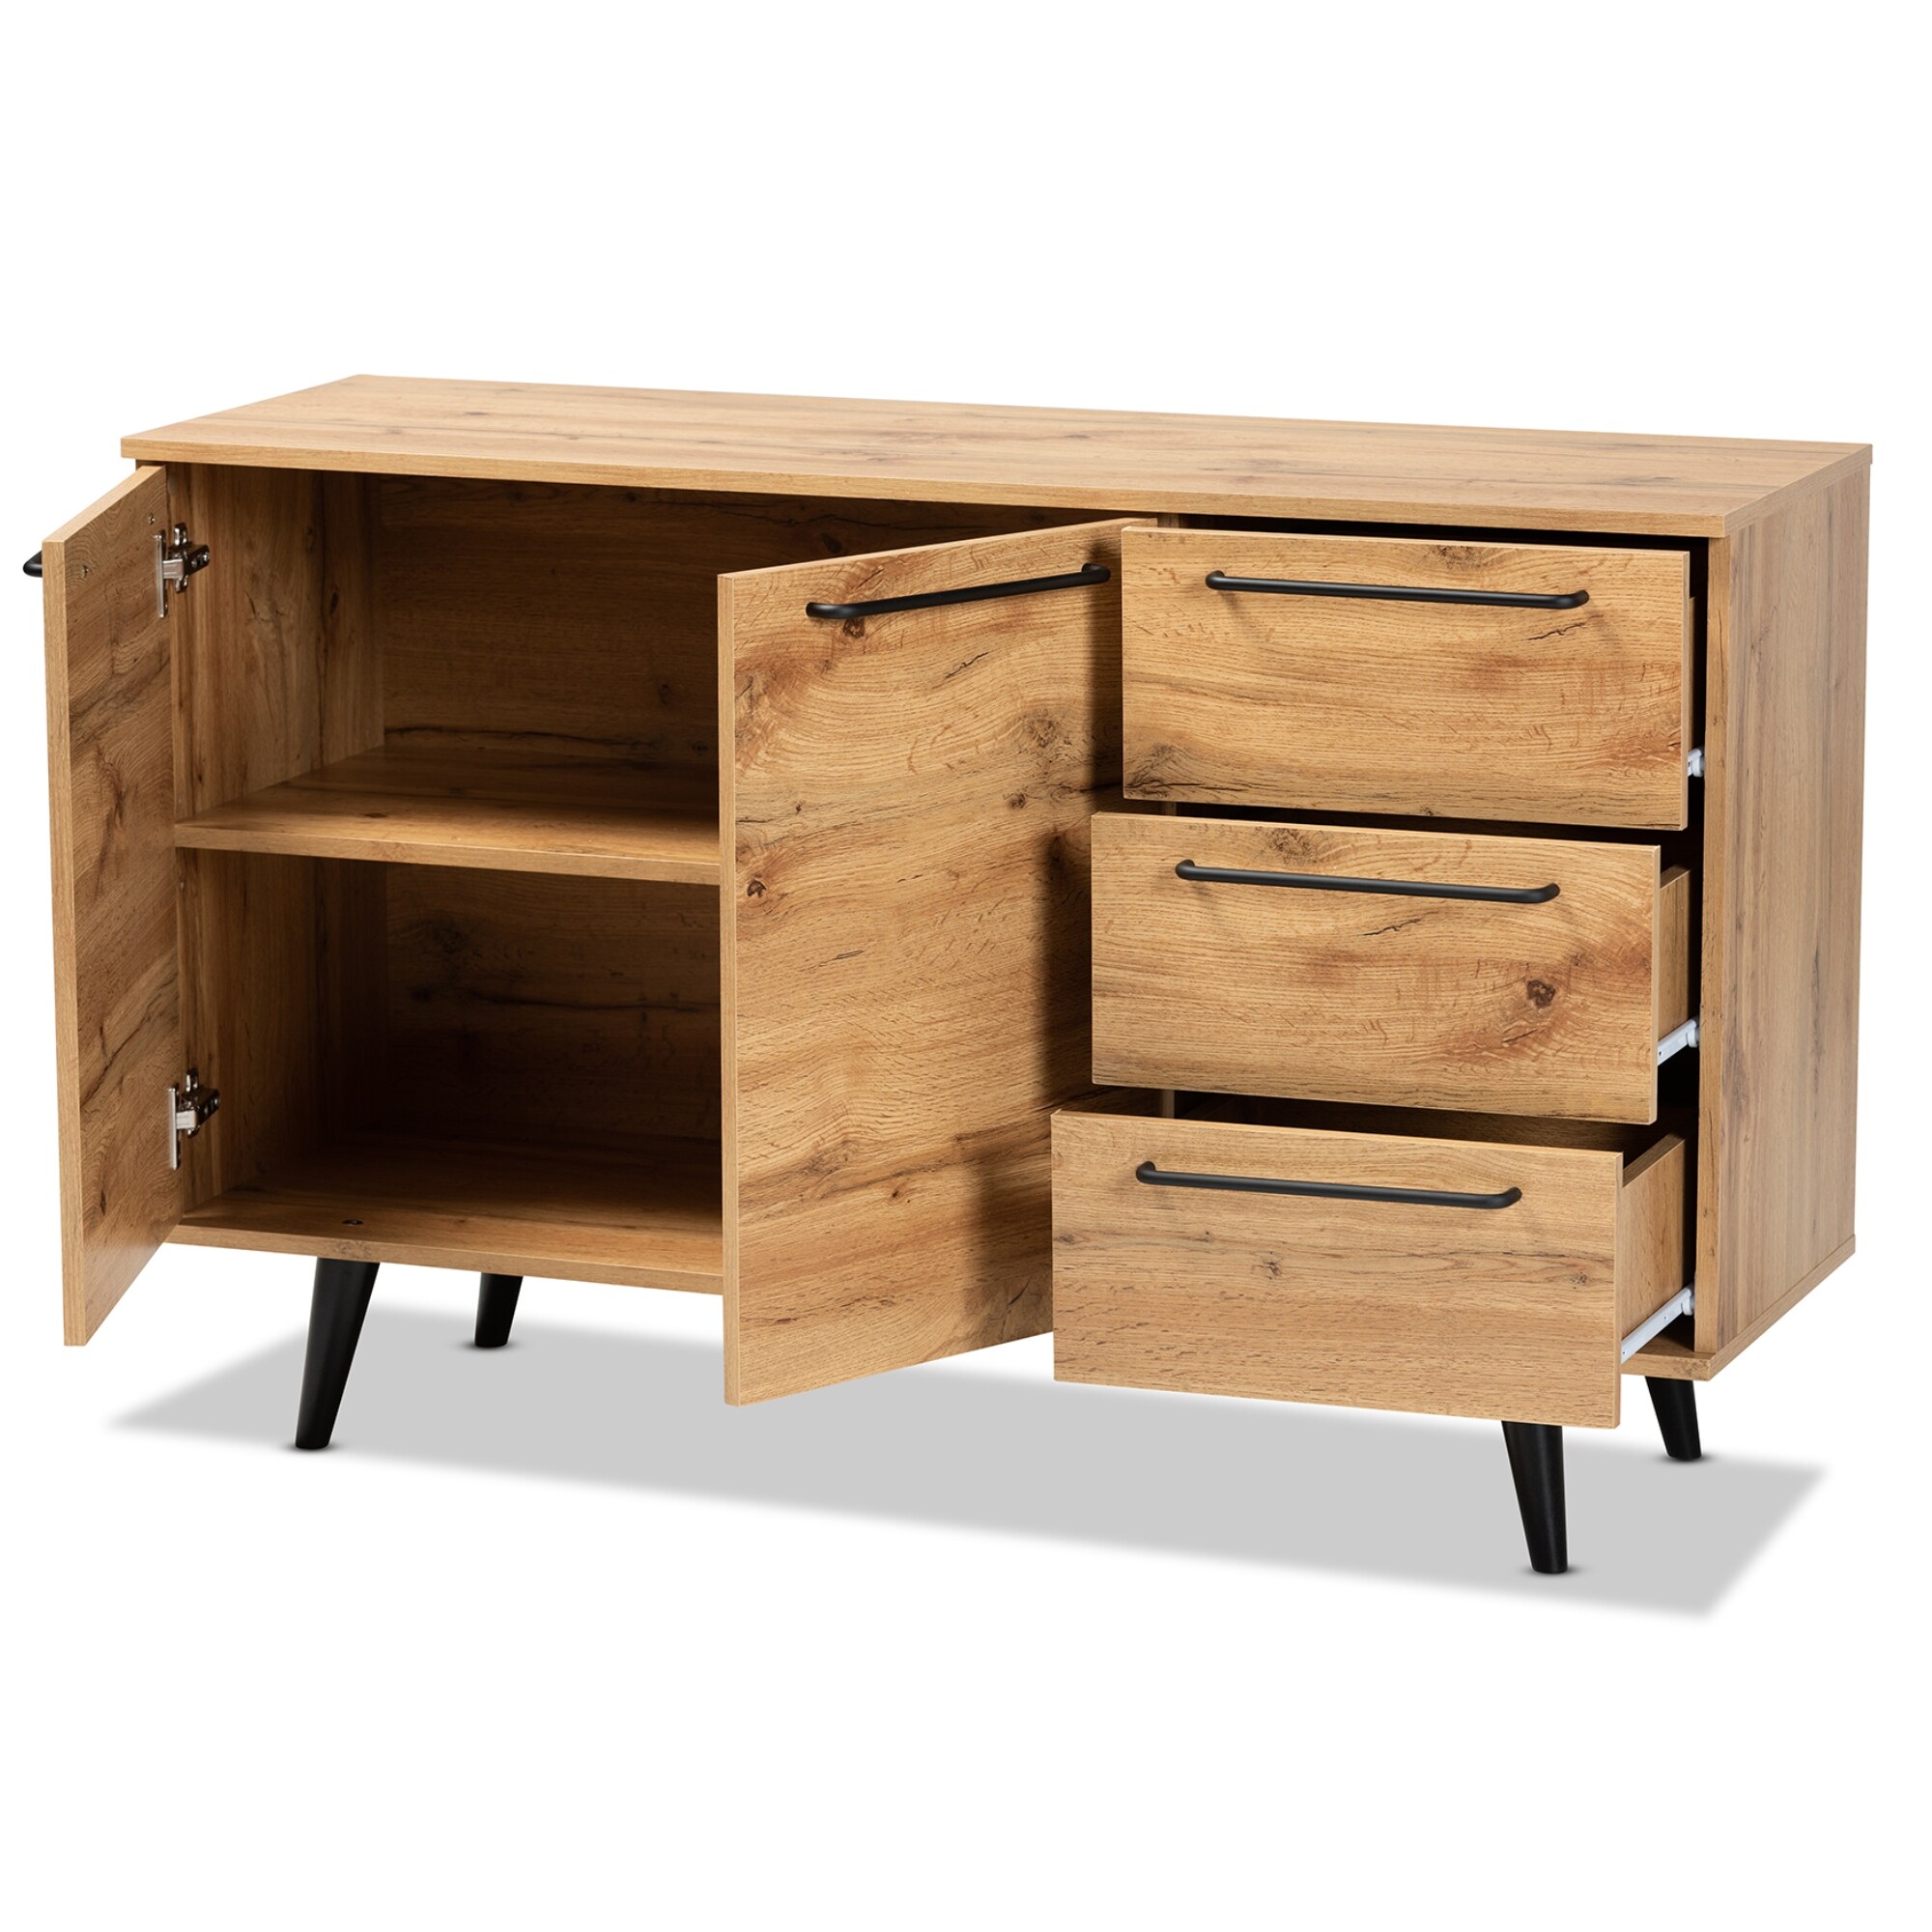 3 Door 3 Drawer Storage Dresser Cupboard Cabinet Unit Anacapri oak Large Sideboard